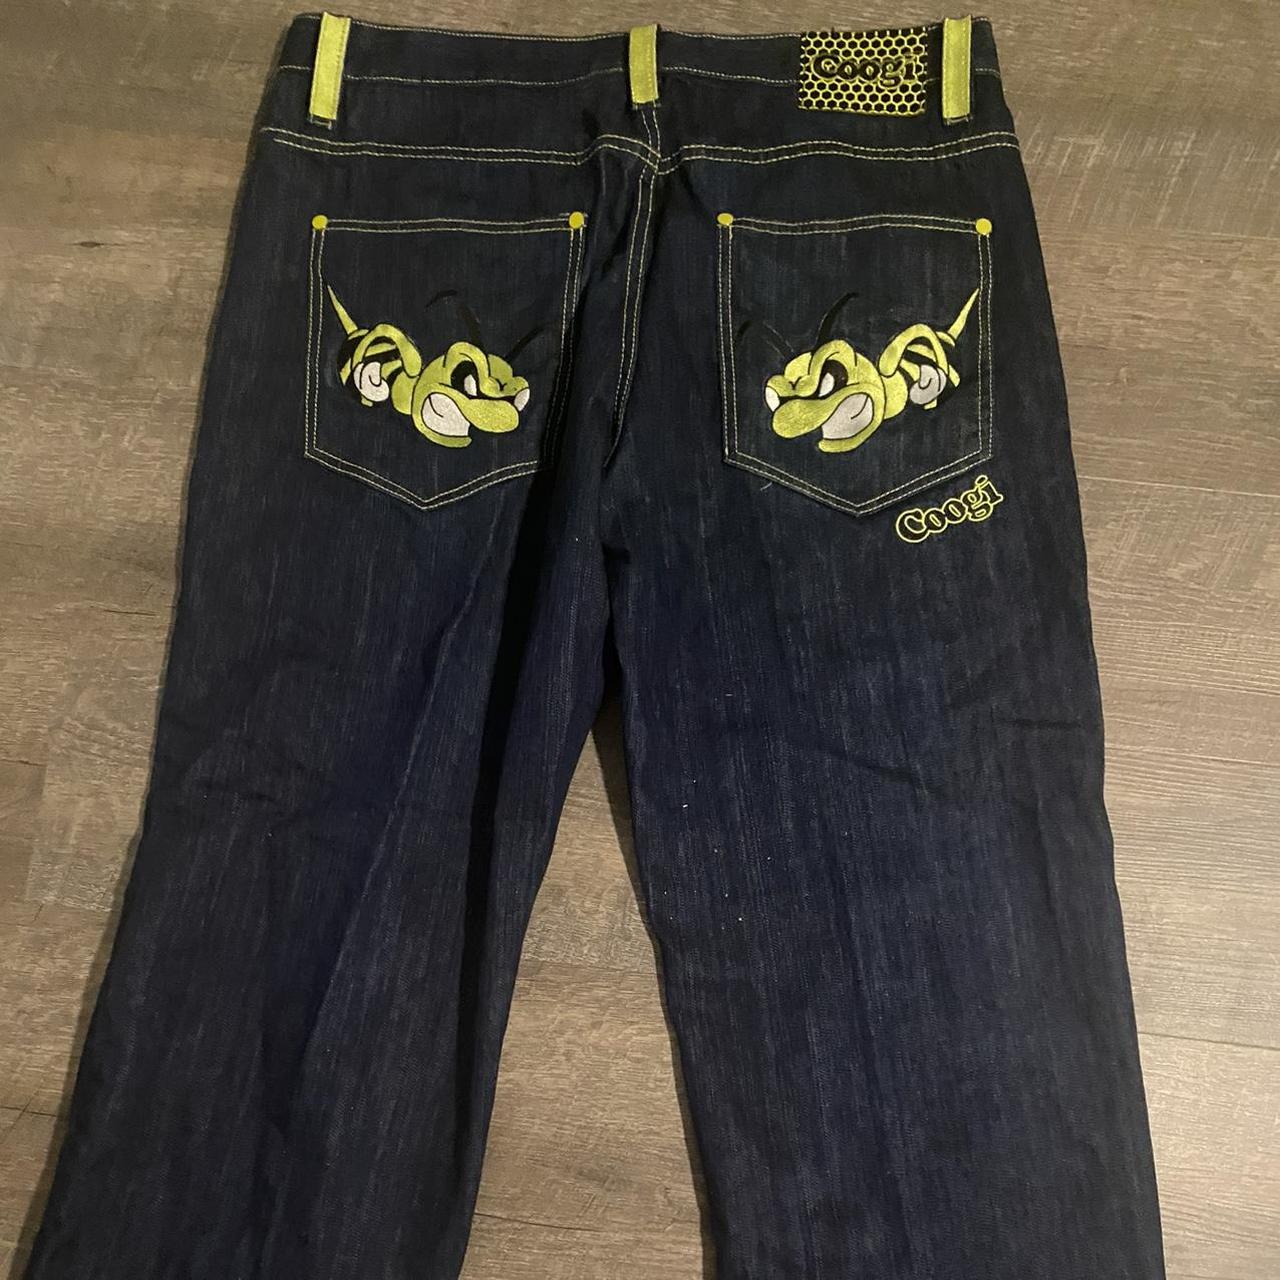 Coogi Men's Jeans